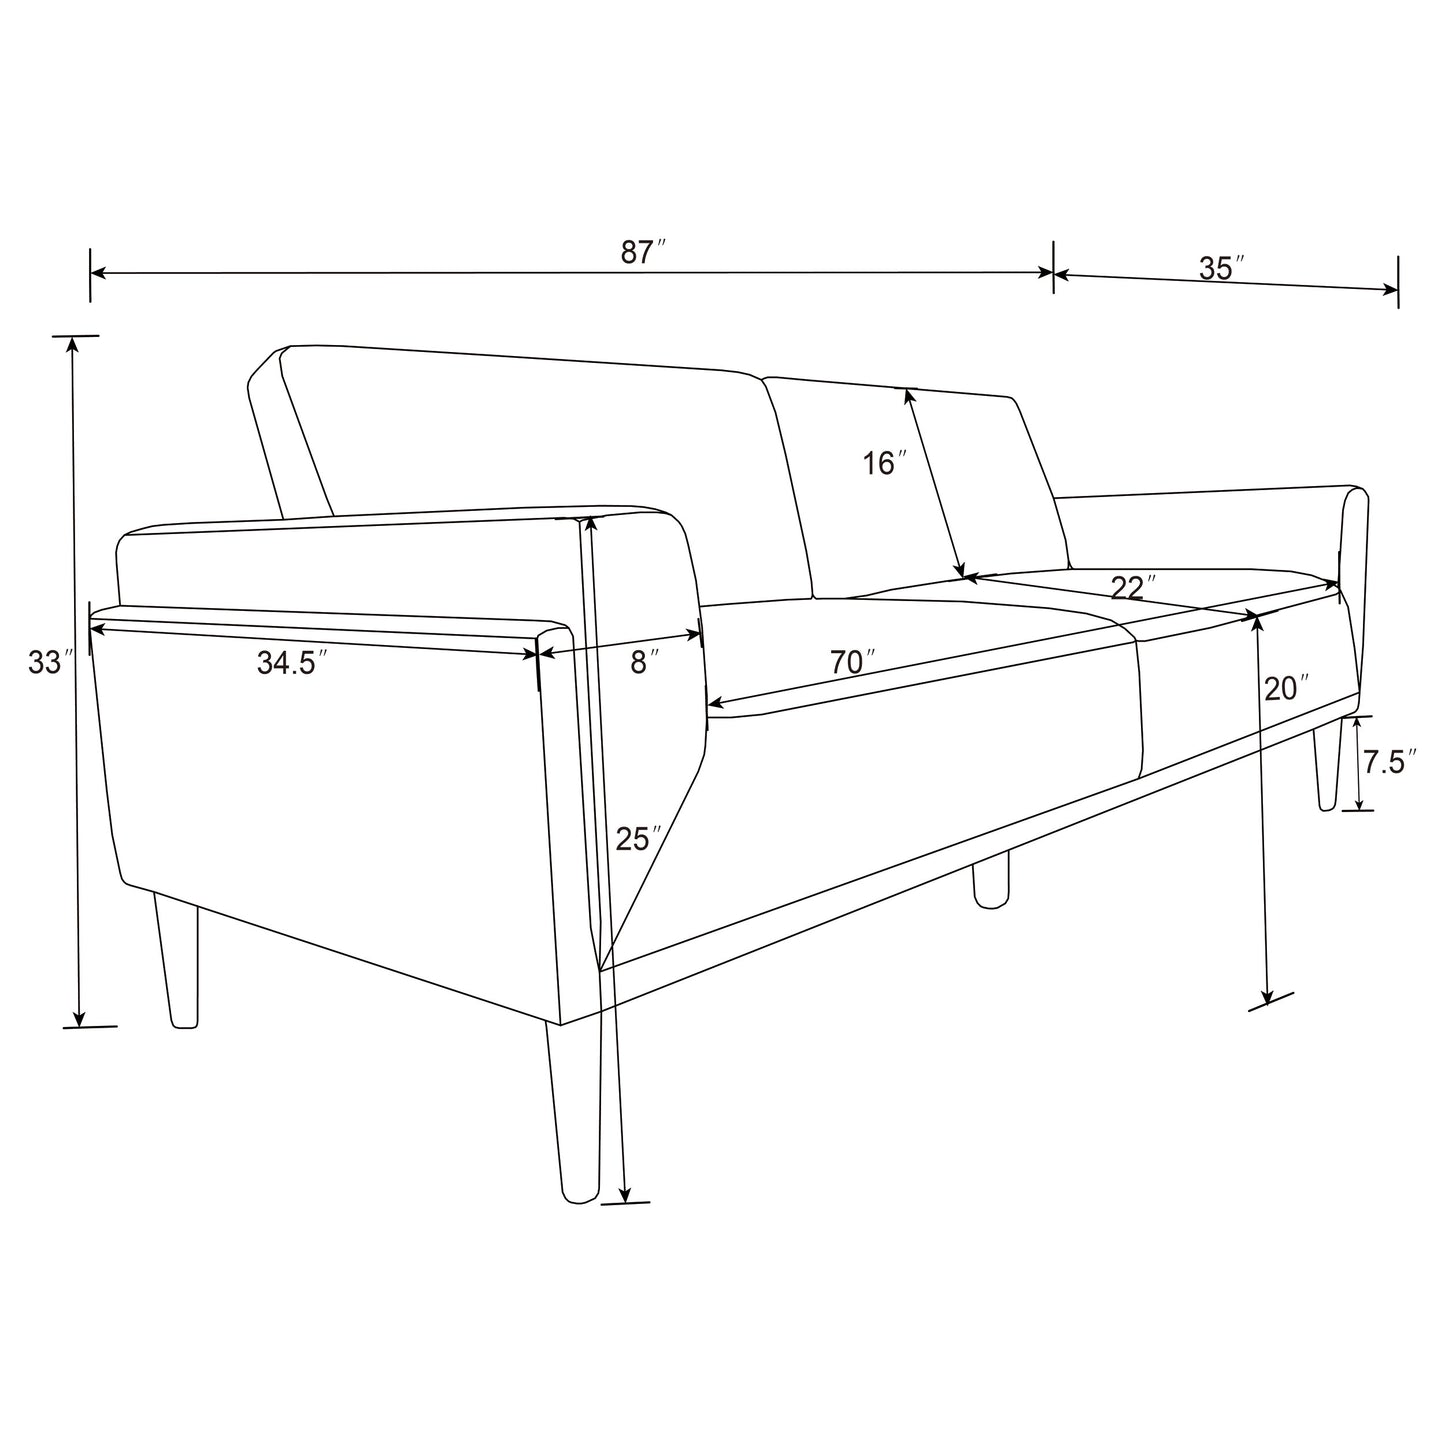 Rilynn 3-piece Upholstered Track Arms Sofa Set Grey